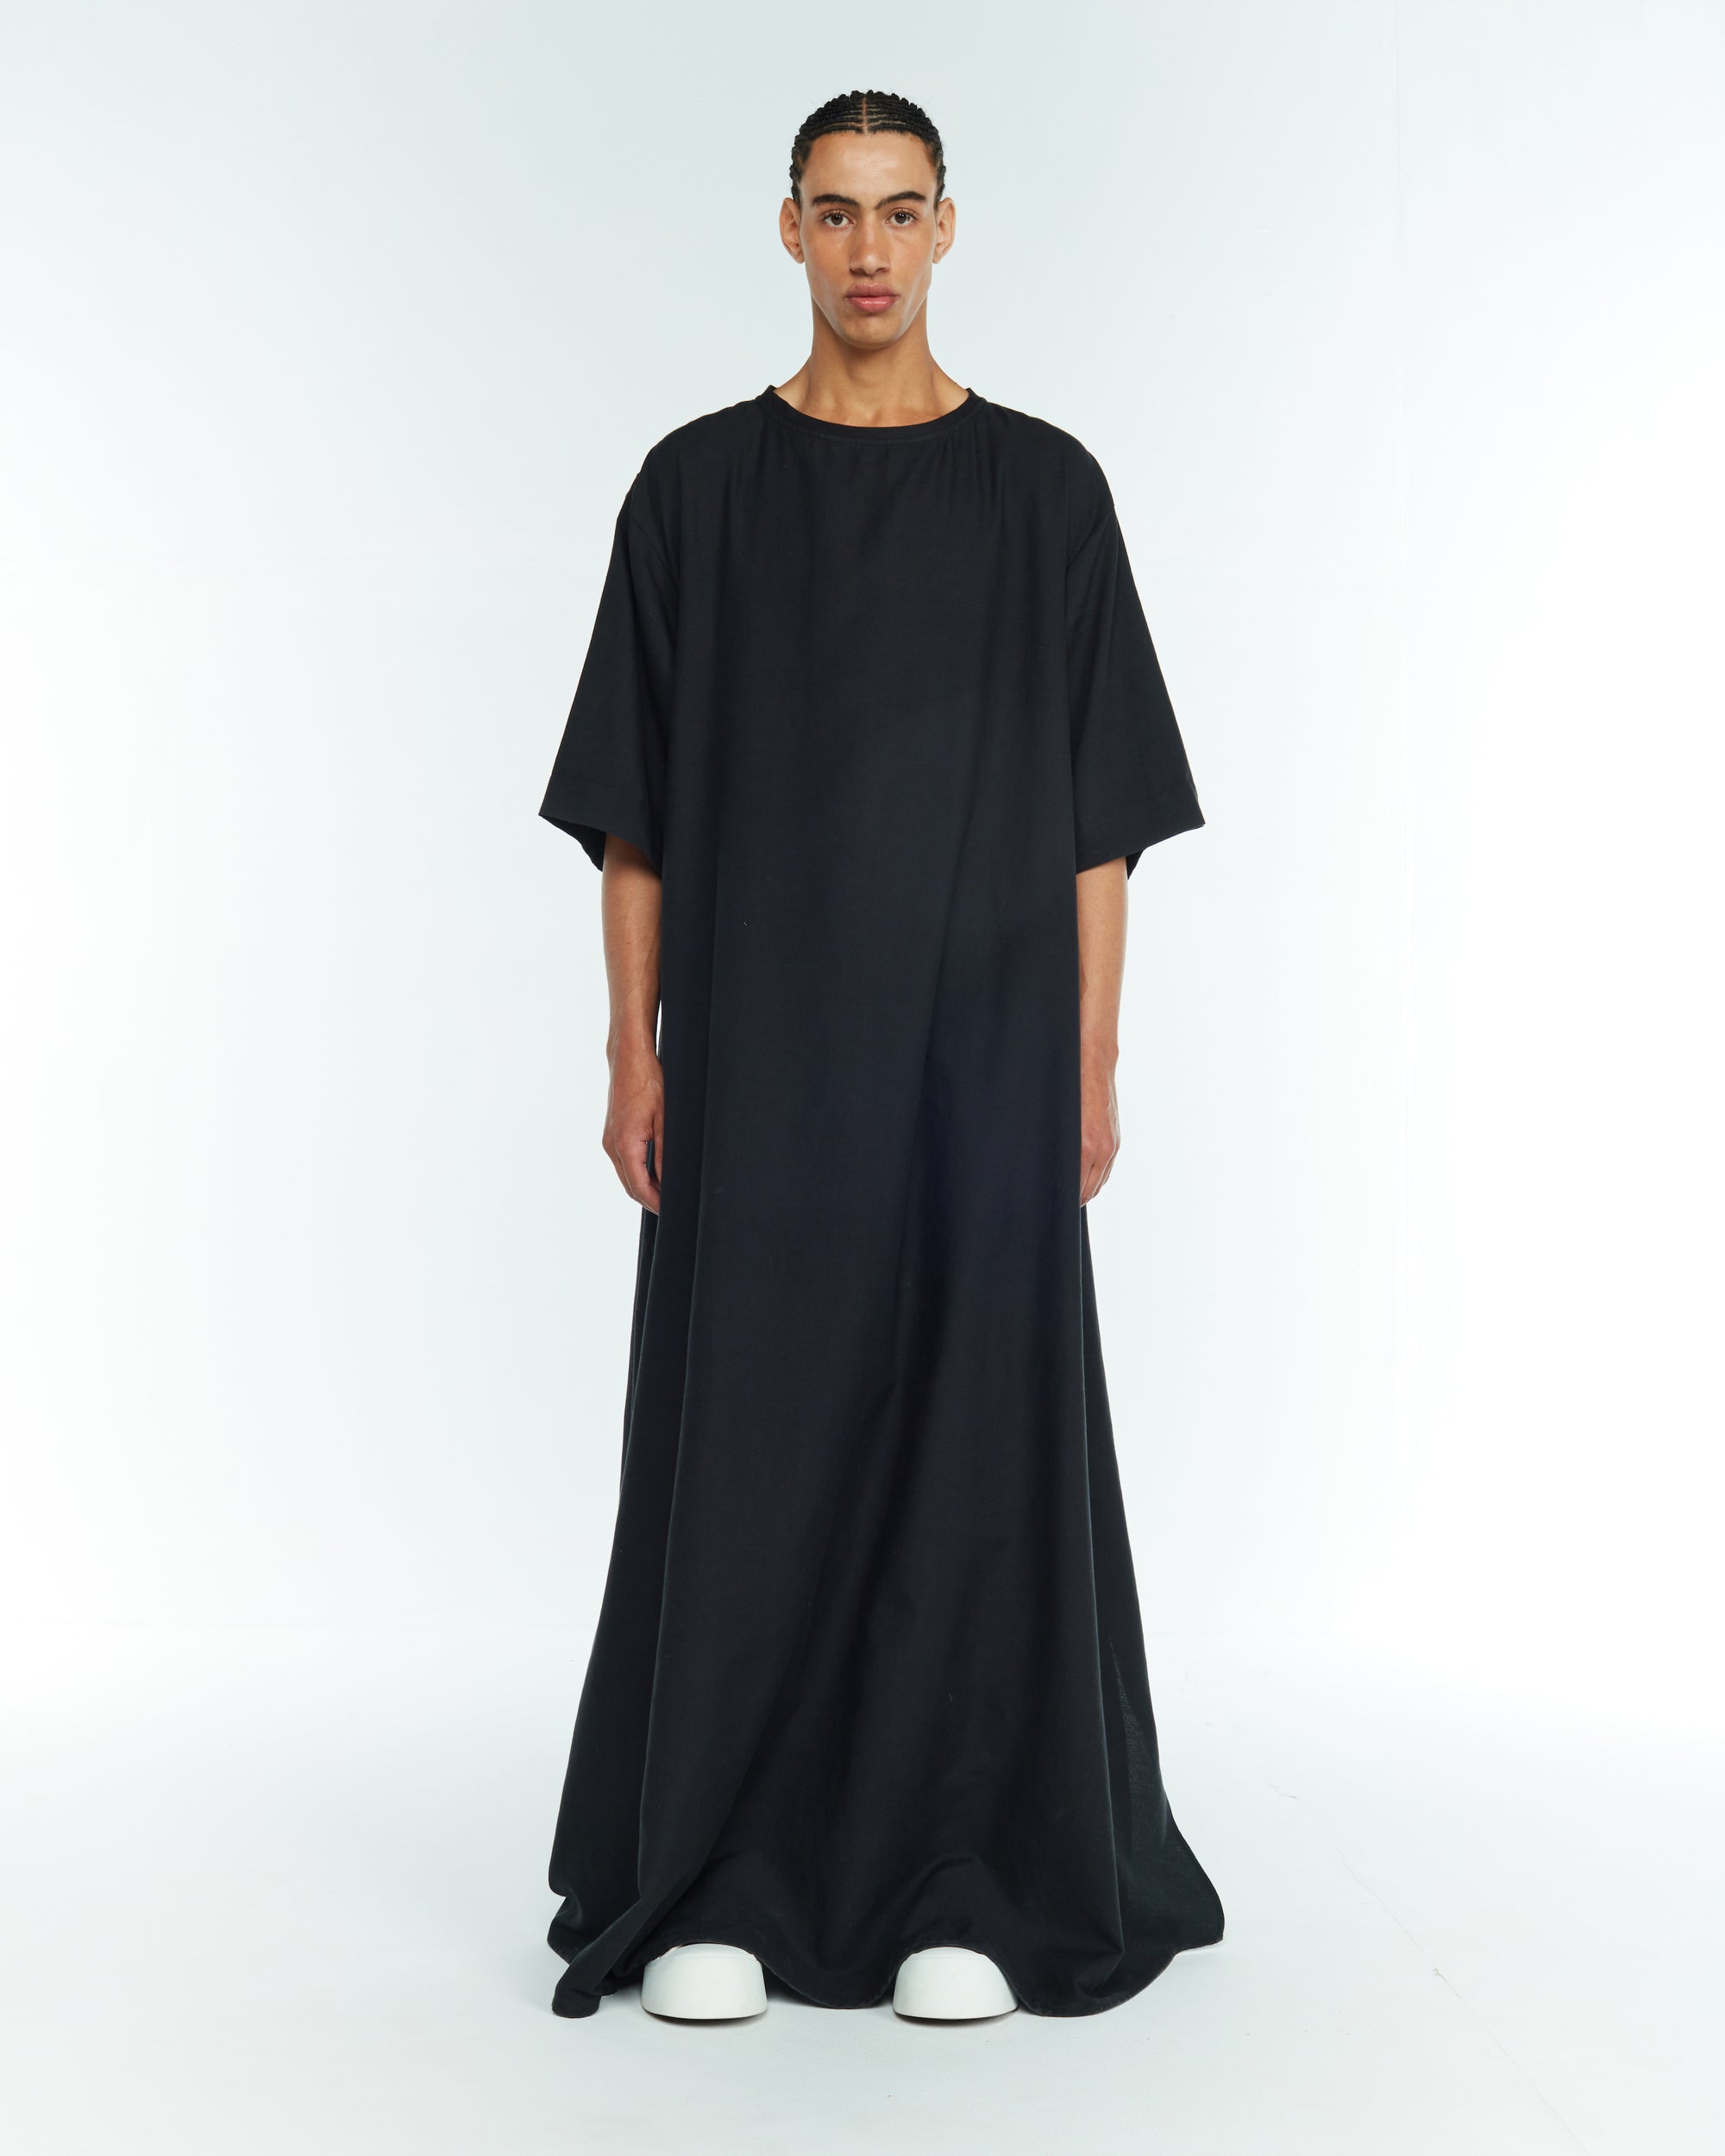 T-SHIRT DRESS : BLACK